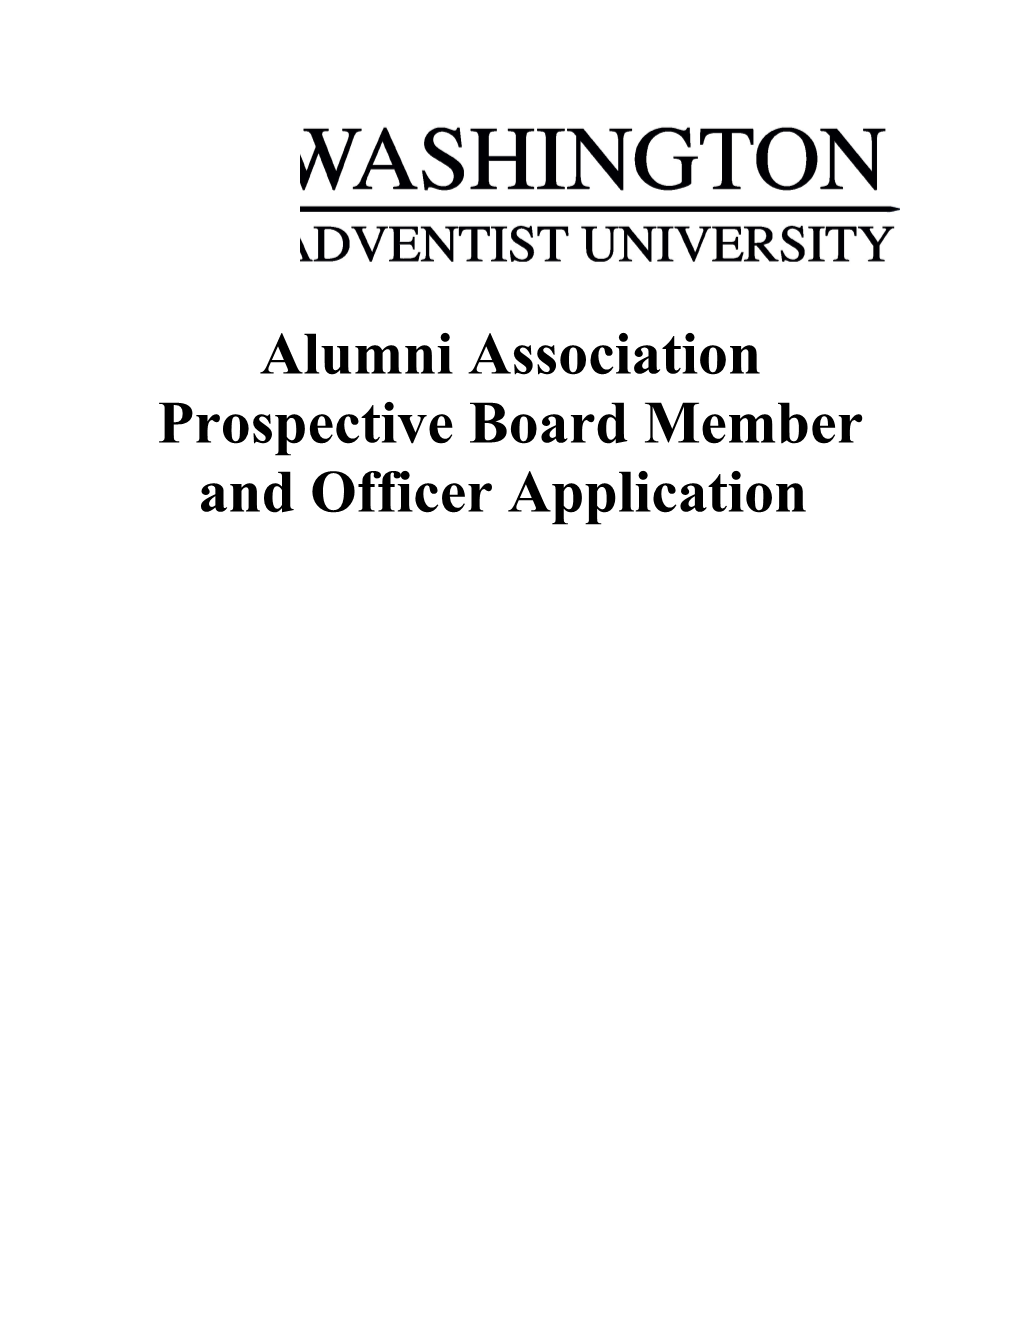 The Alumni Association Board of Directors